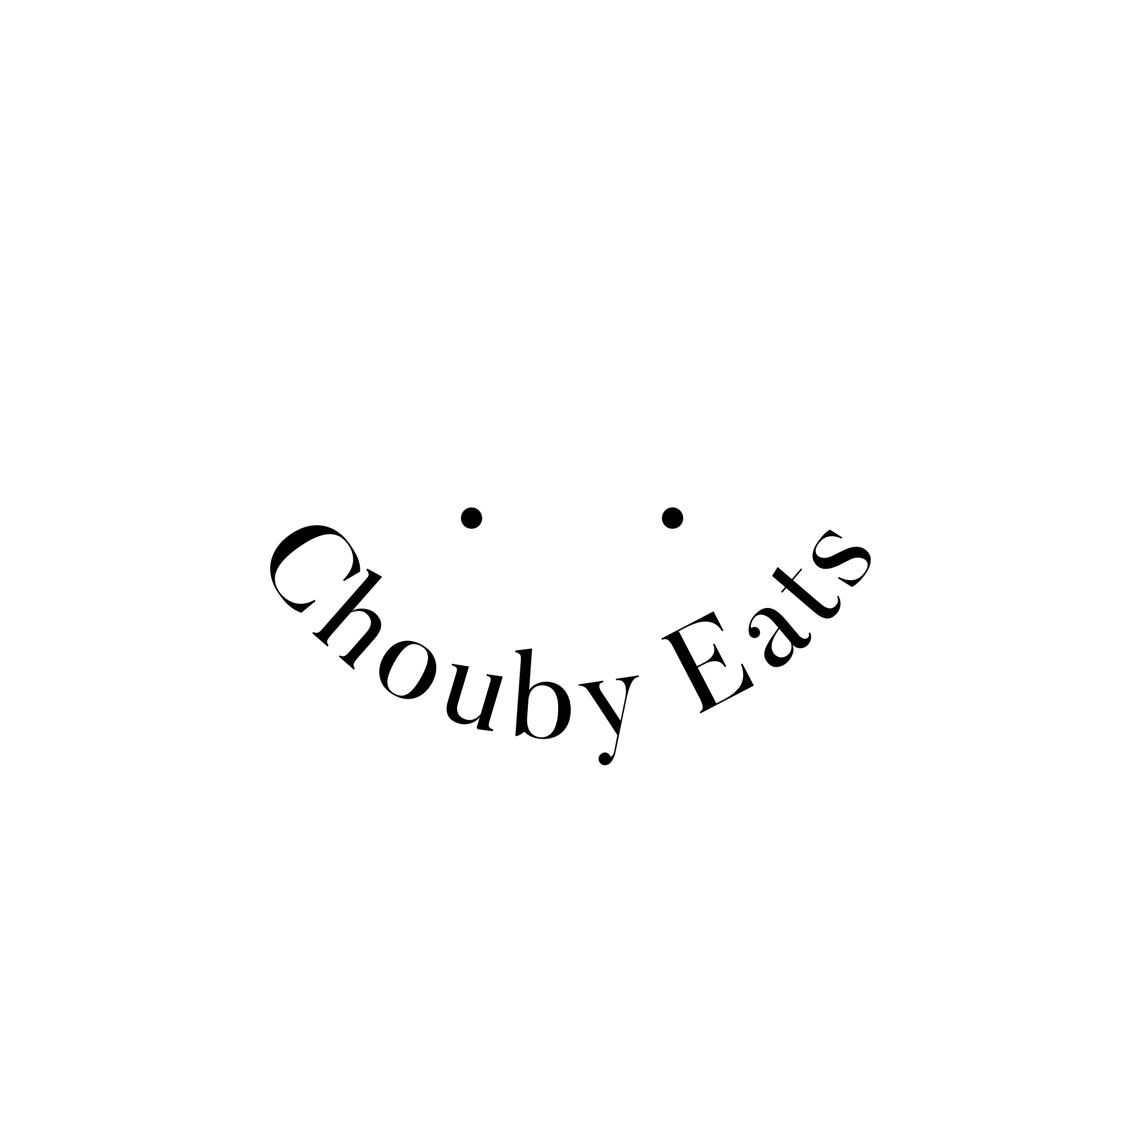 ChoubyEats